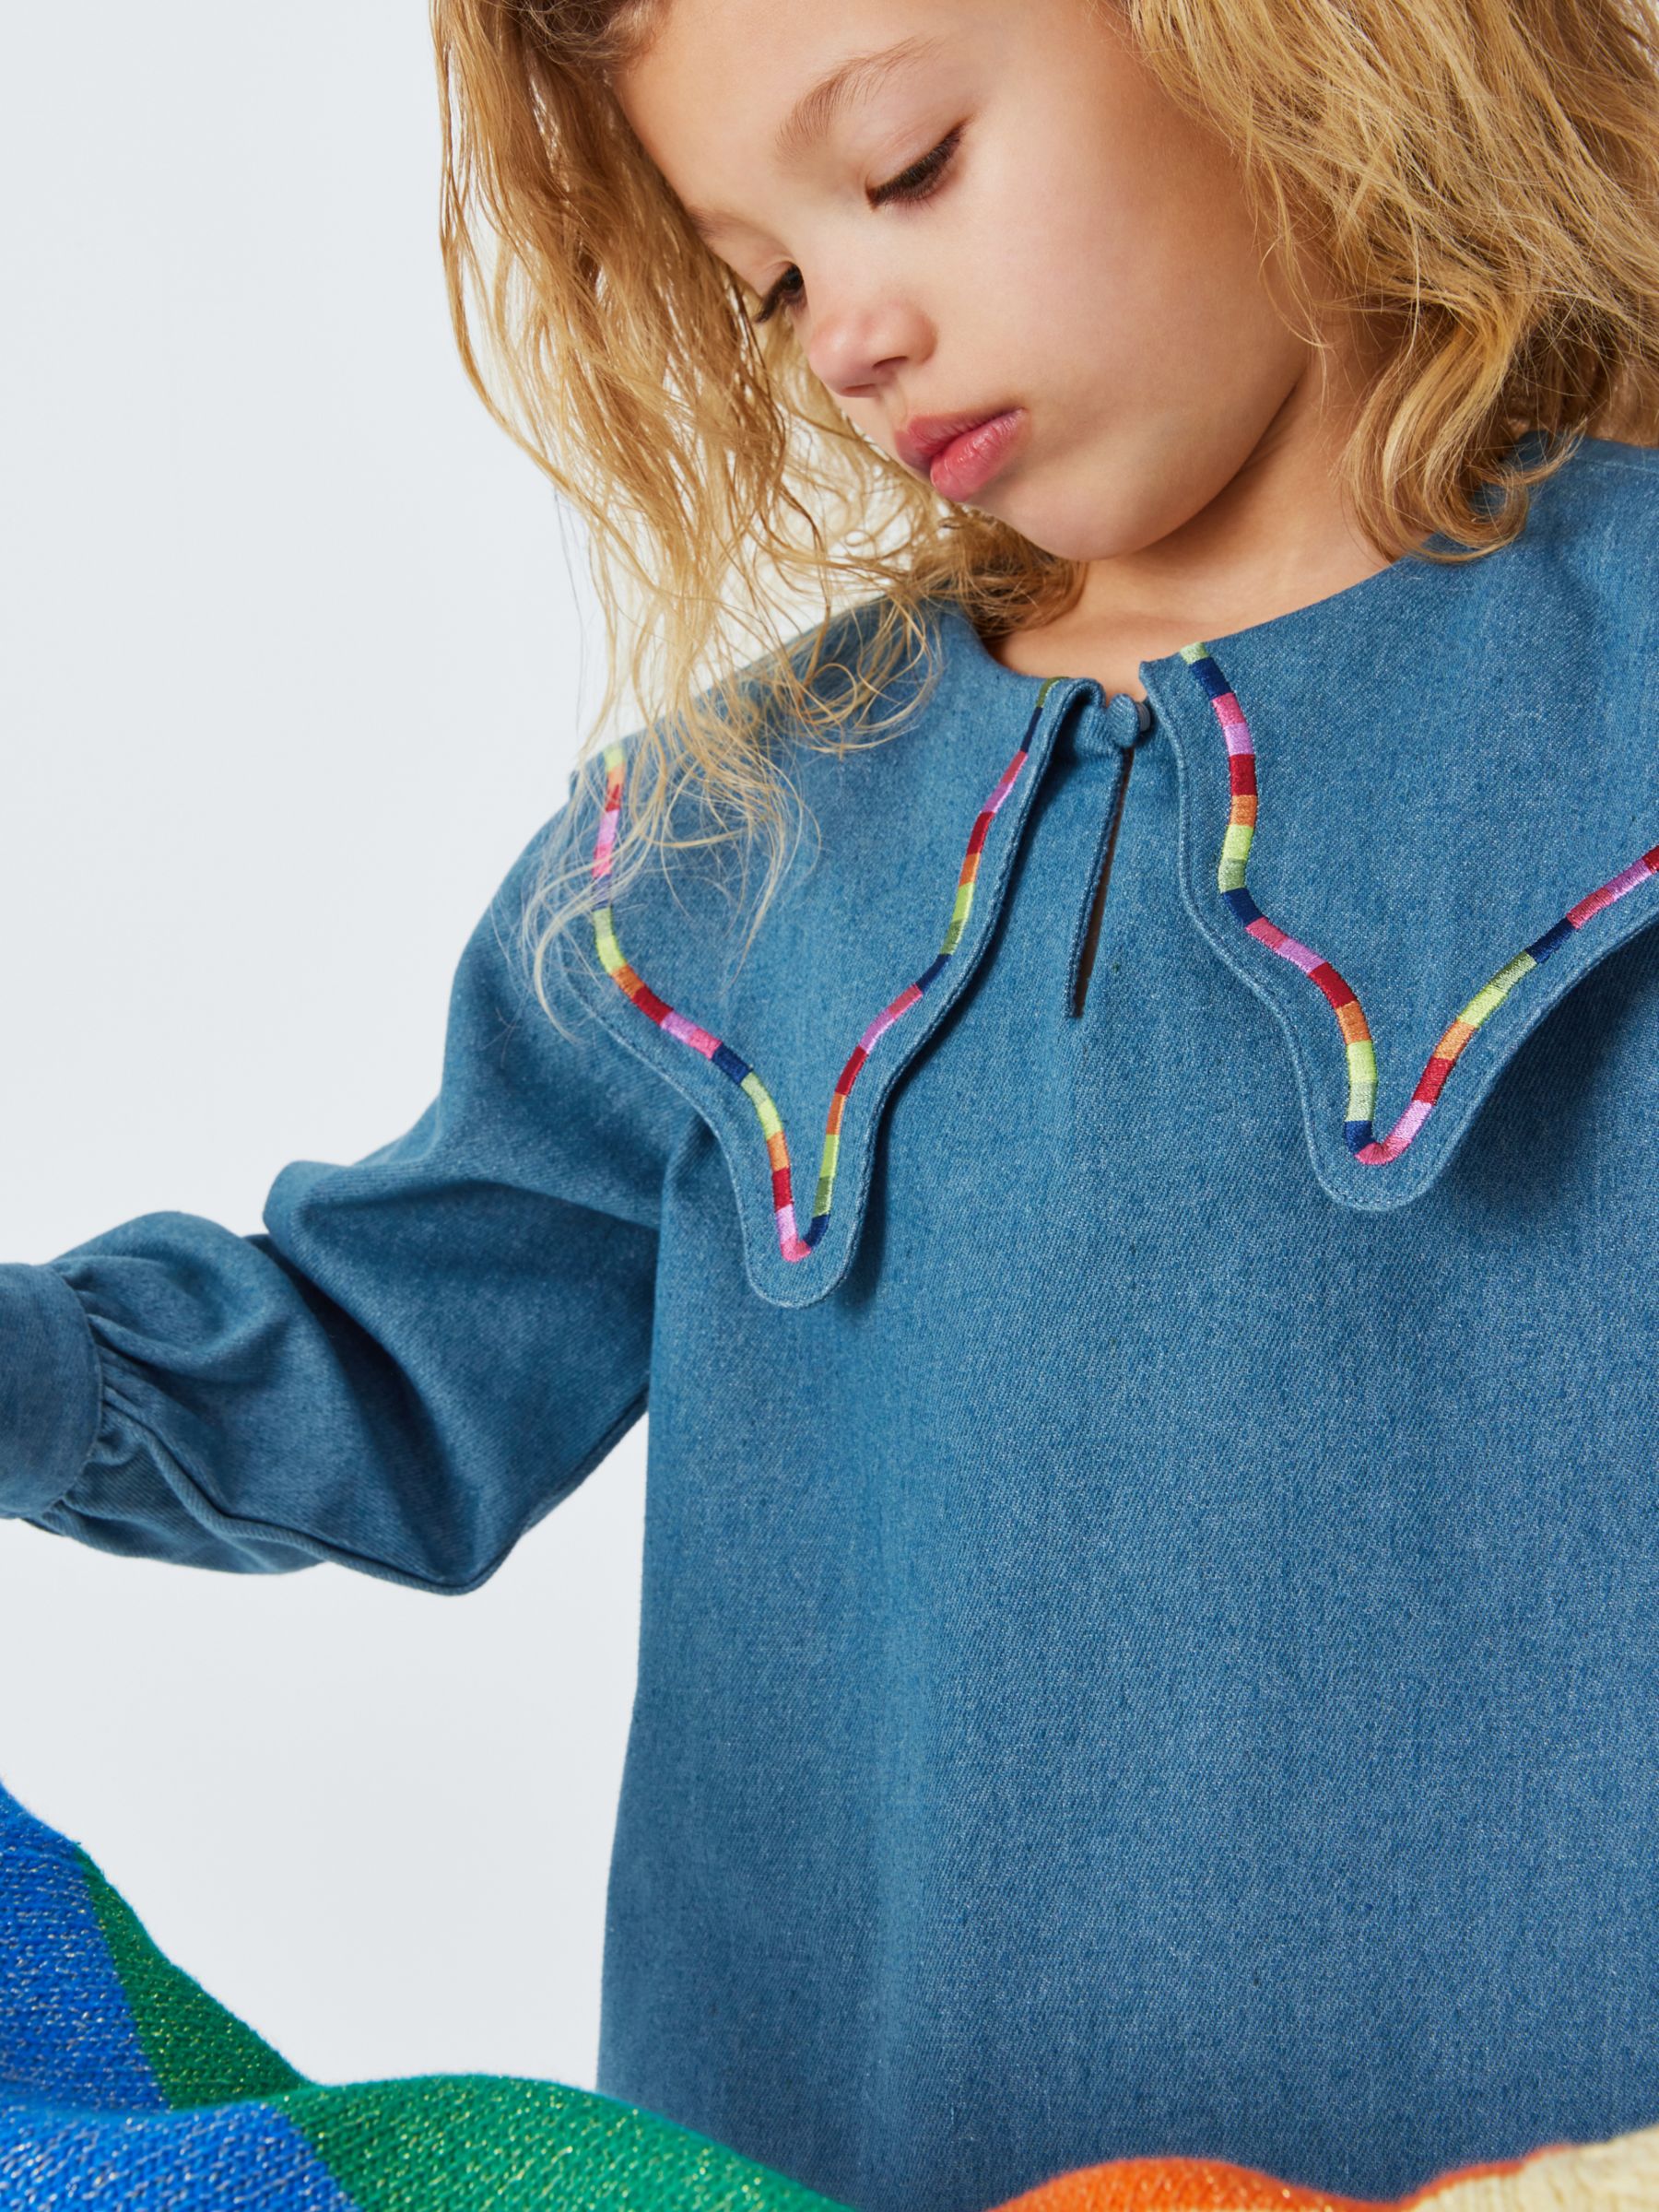 Olivia Rubin Kids' Bryony Rainbow Embroidered Oversized Collar Blouse, Denim, 4-5 years